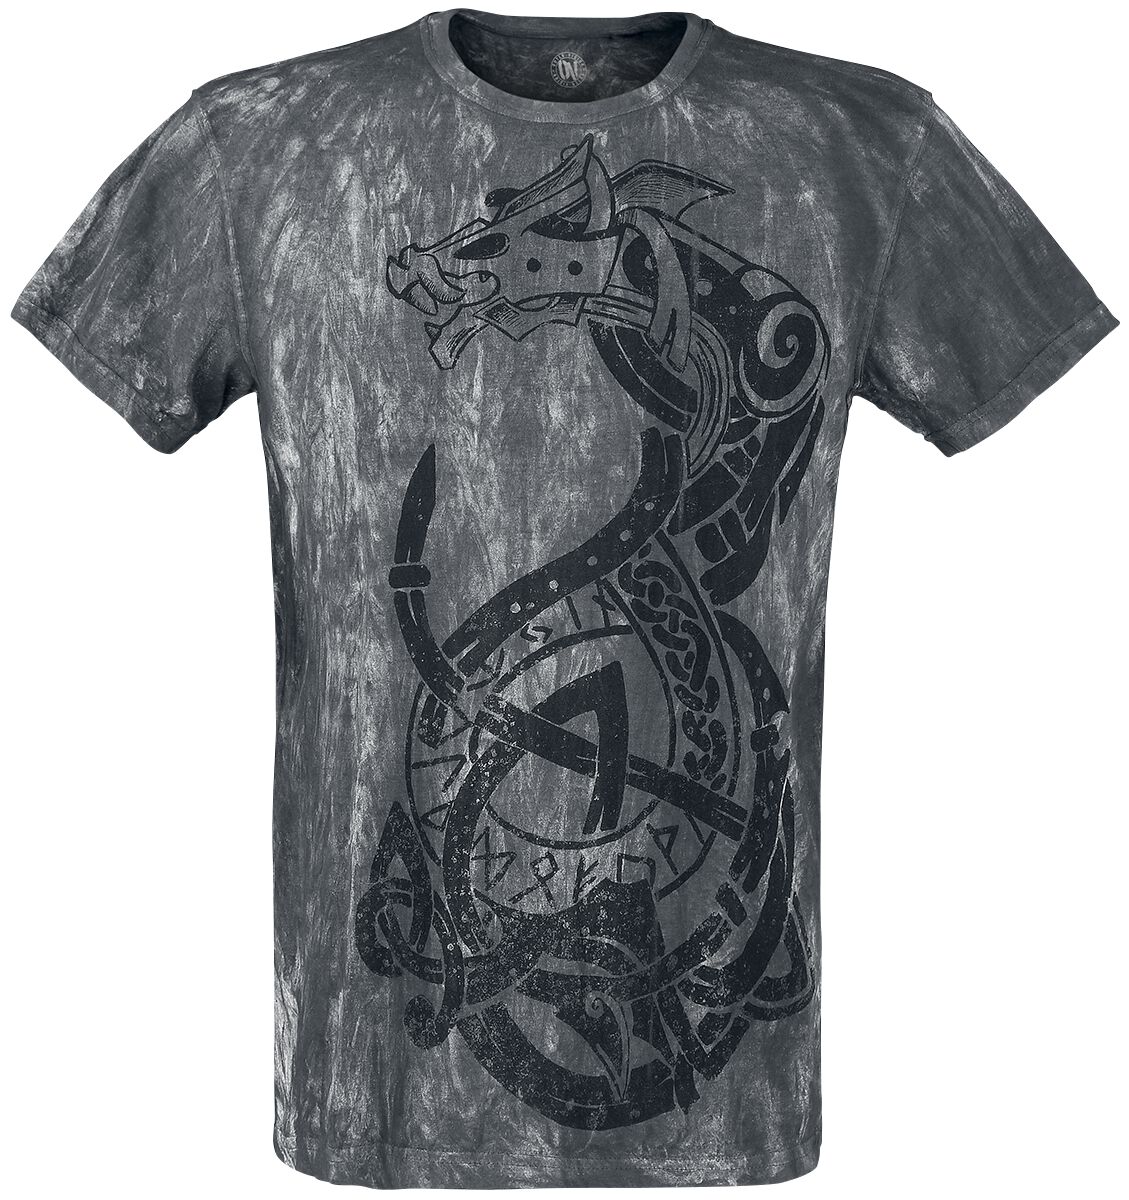 Outer Vision Viking Warrior T-Shirt grau in L